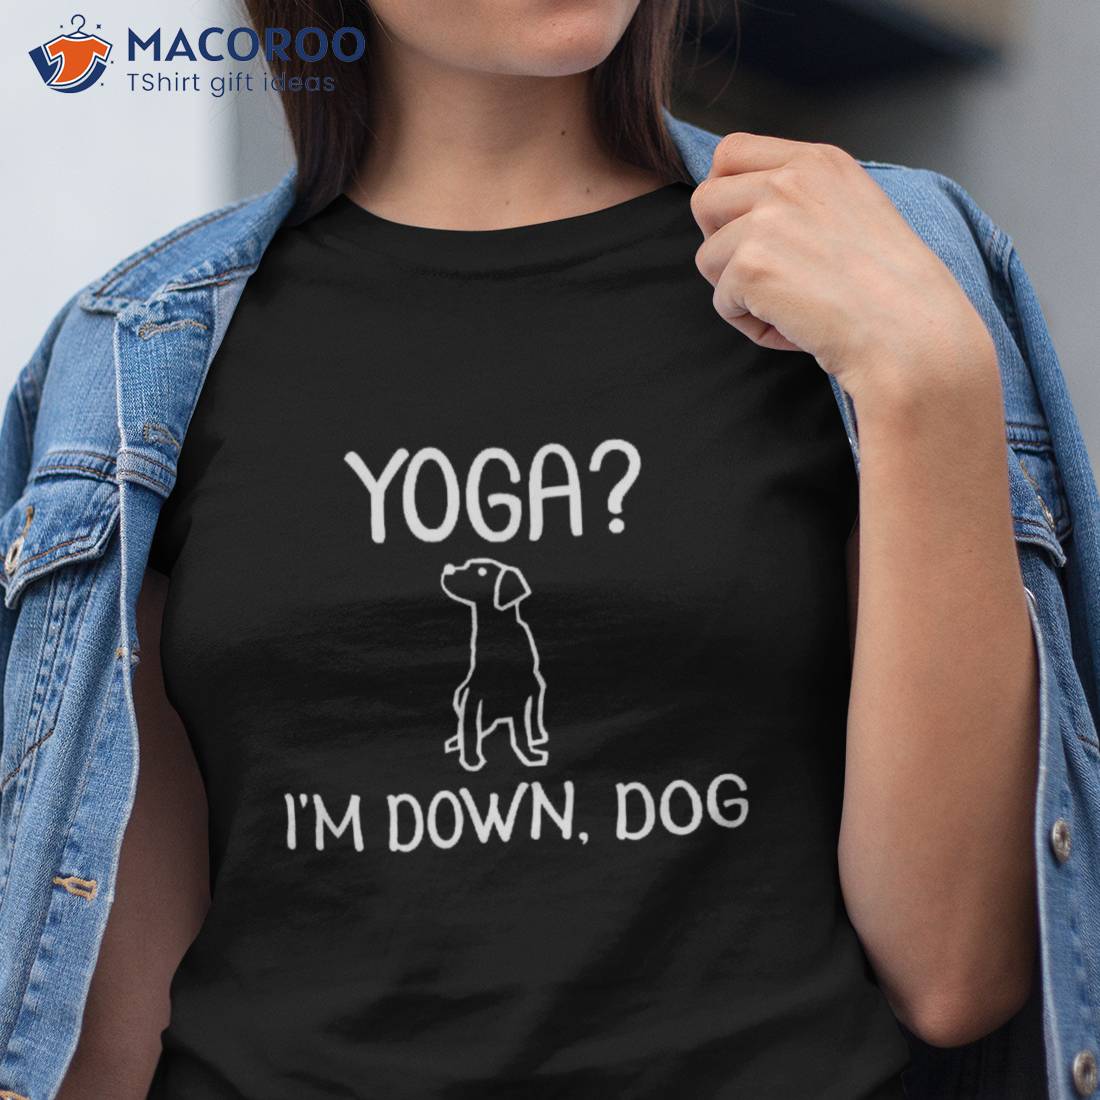 Yoga humor  Yoga funny, Yoga jokes, Yoga illustration